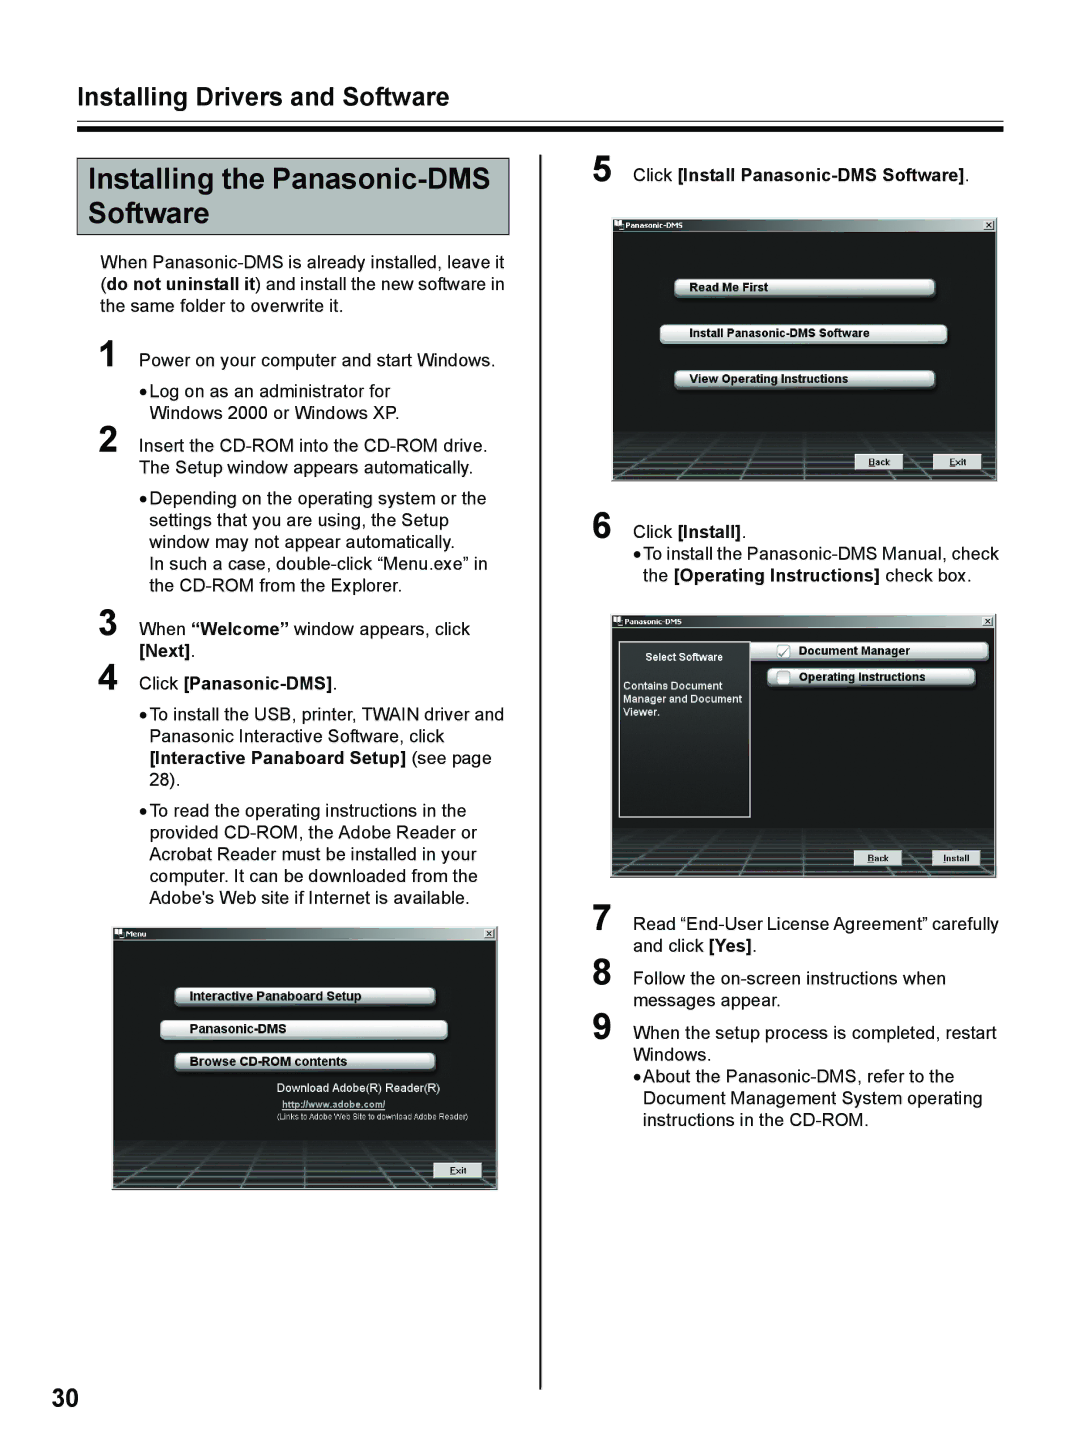 Panasonic UB-8325 Installing the Panasonic-DMS Software, Click Panasonic-DMS, Click Install Panasonic-DMS Software 